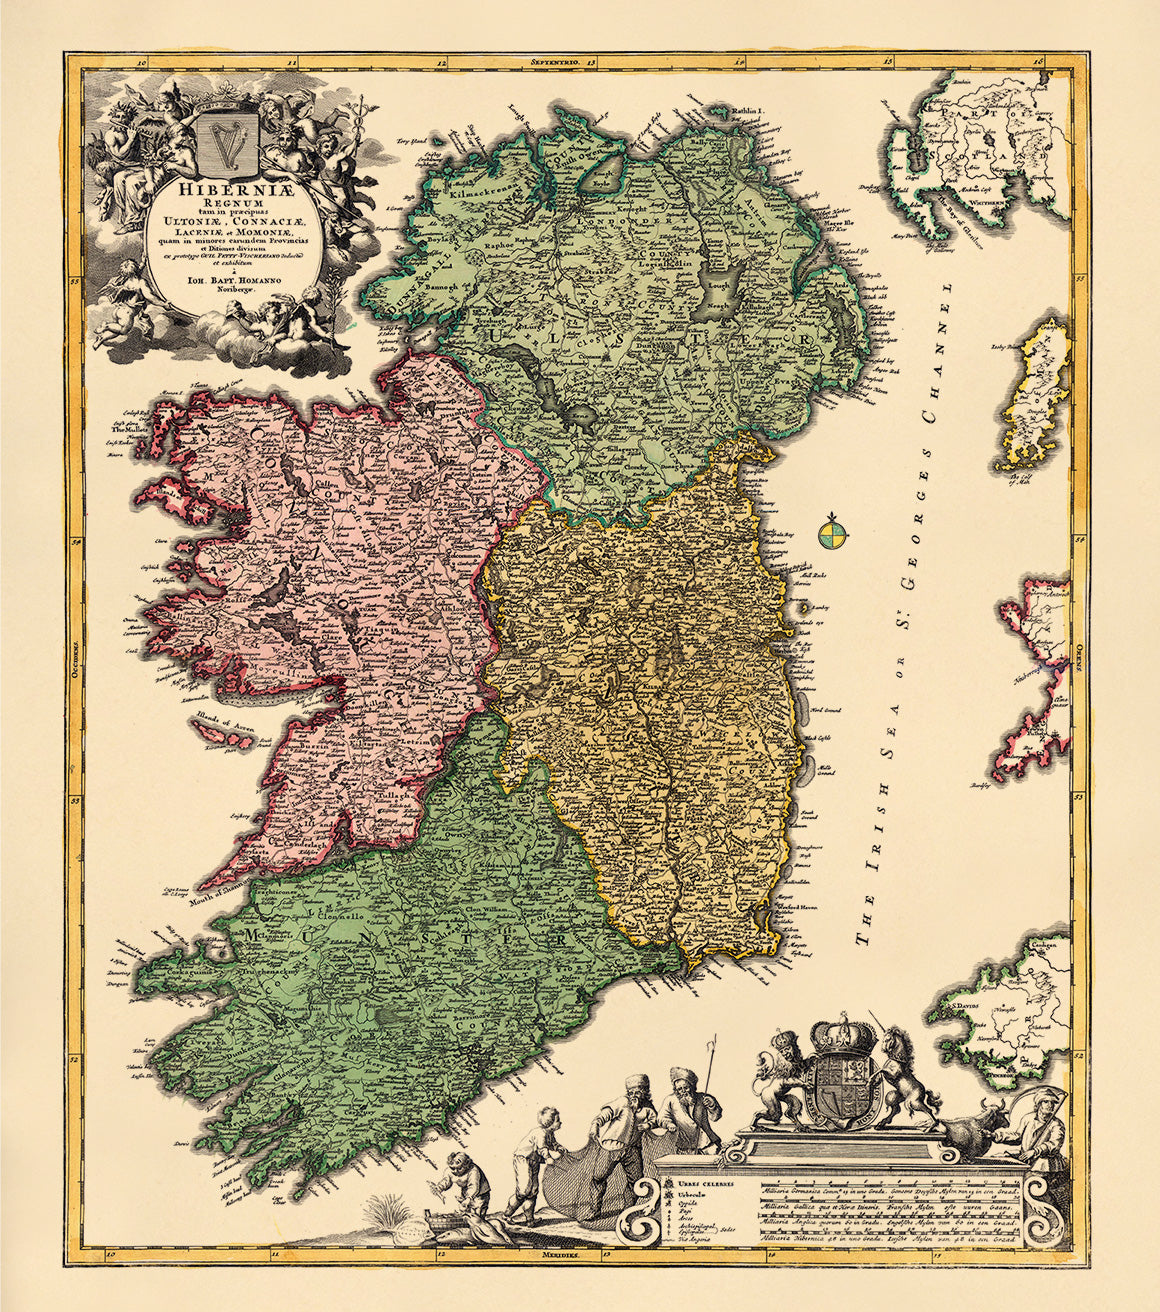 The Kingdom of Ireland, Divided As Much Into the Main Regions of Ulster, Connacht, Leinster and Munster. (Hiberniæ Regnum Tam In Præcipuas Ultoniæ, Connaciæ, Laceniæ Et Momoniæ, Quam In Minores Earundem Provincias Et Ditiones Divisum) 1715